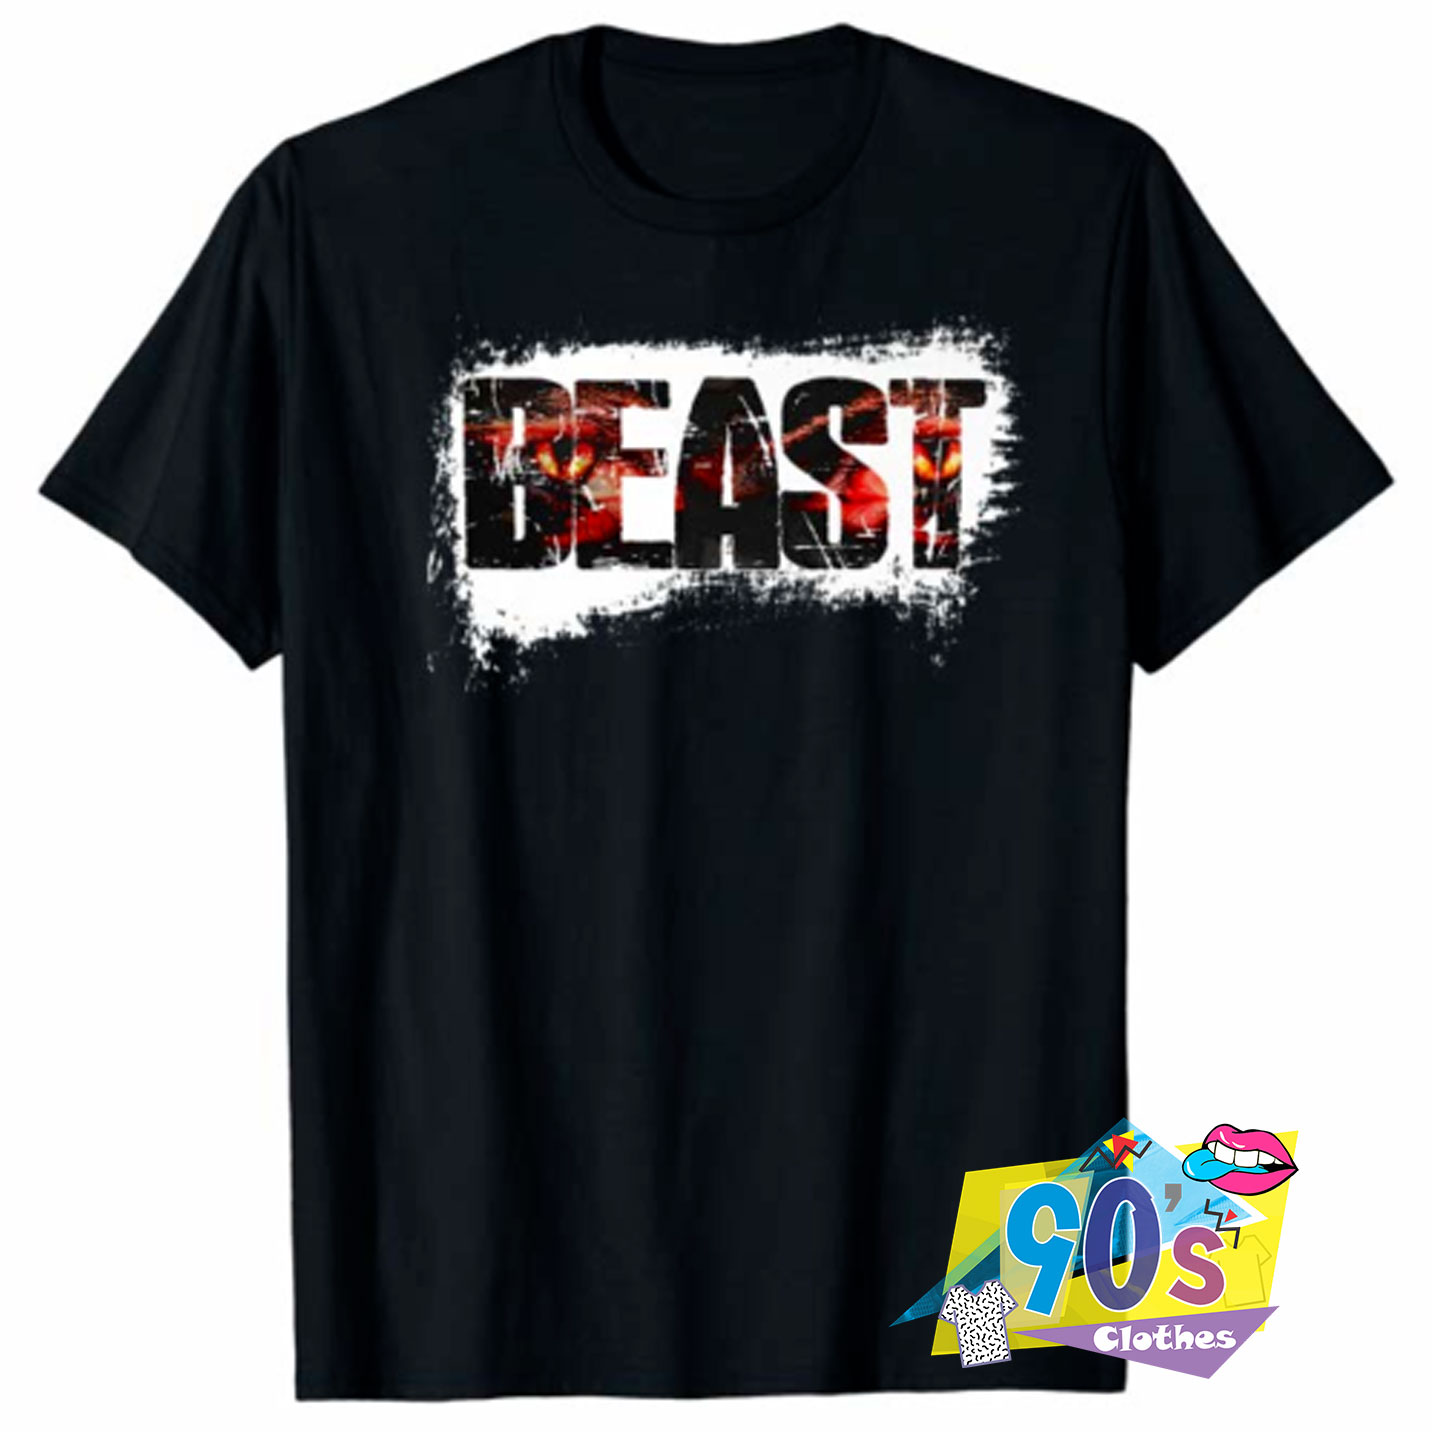 Beast Graphic Design T Shirt On Sale - 90sclothes.com